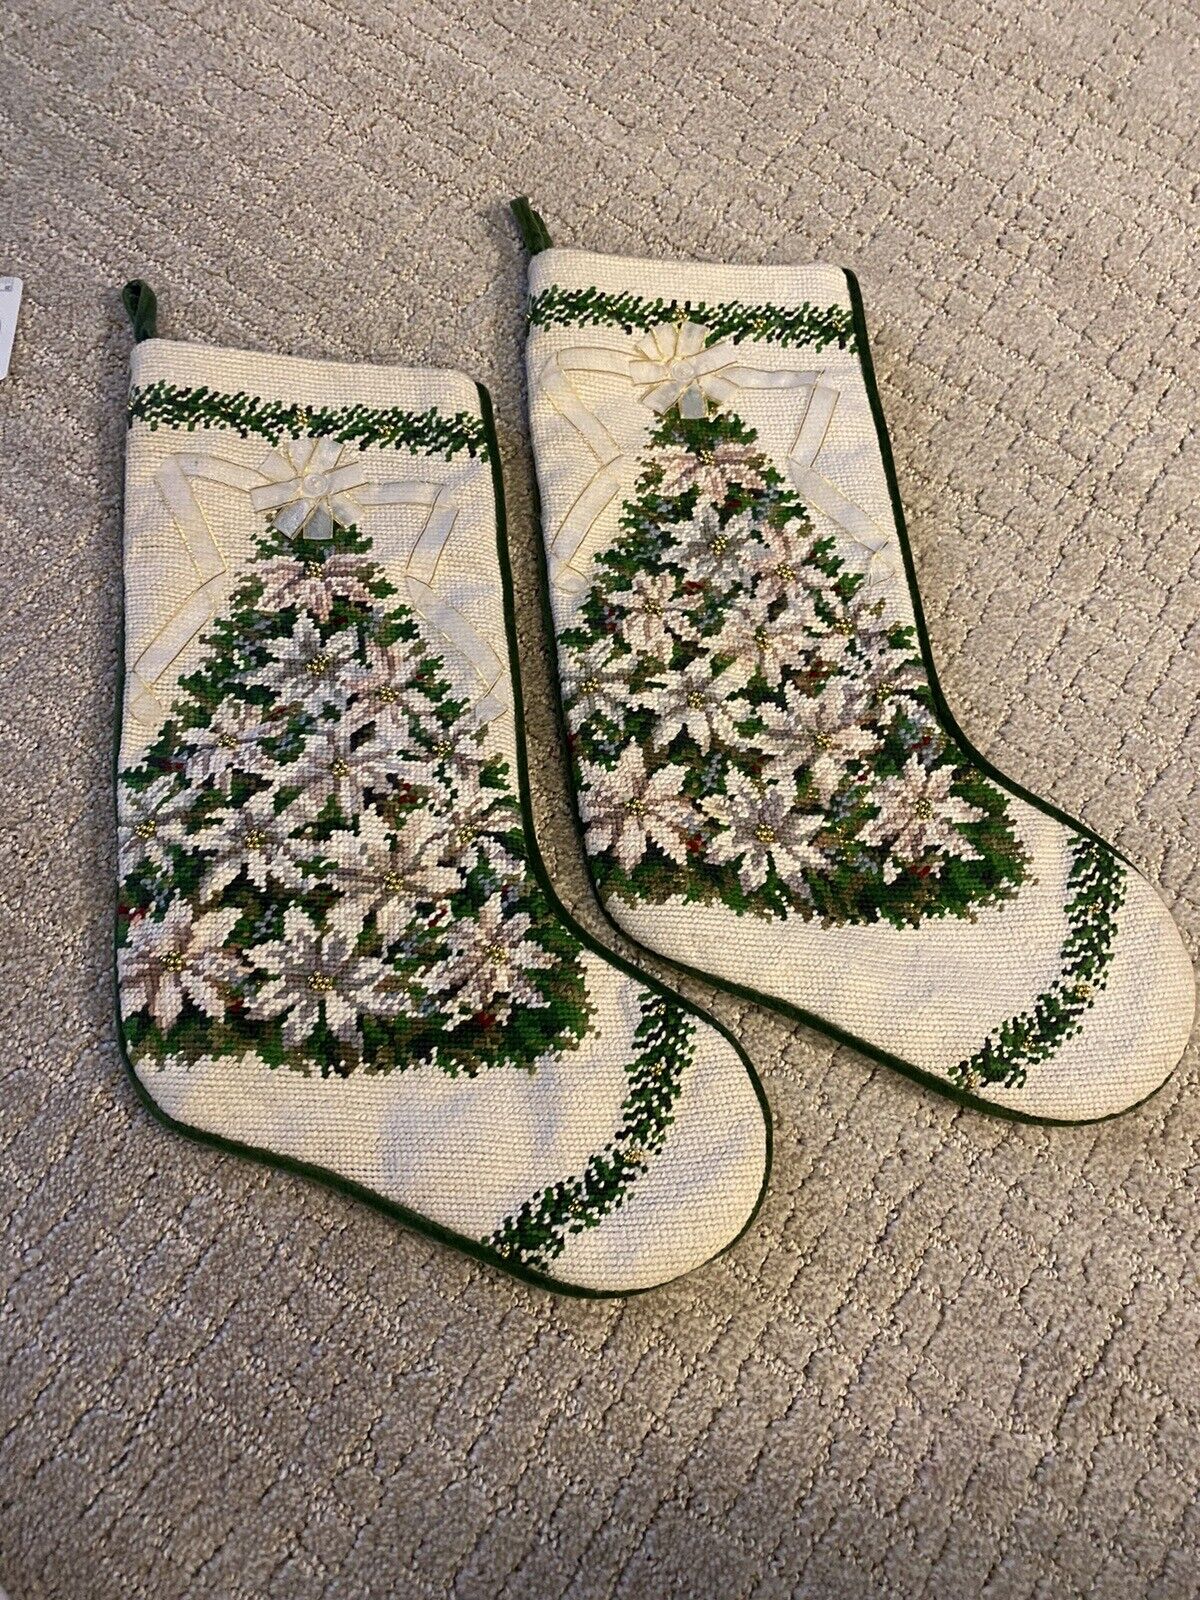 Two Vintage Poinsettia Flower Christmas Tree Handmade Needlepoint Stockings